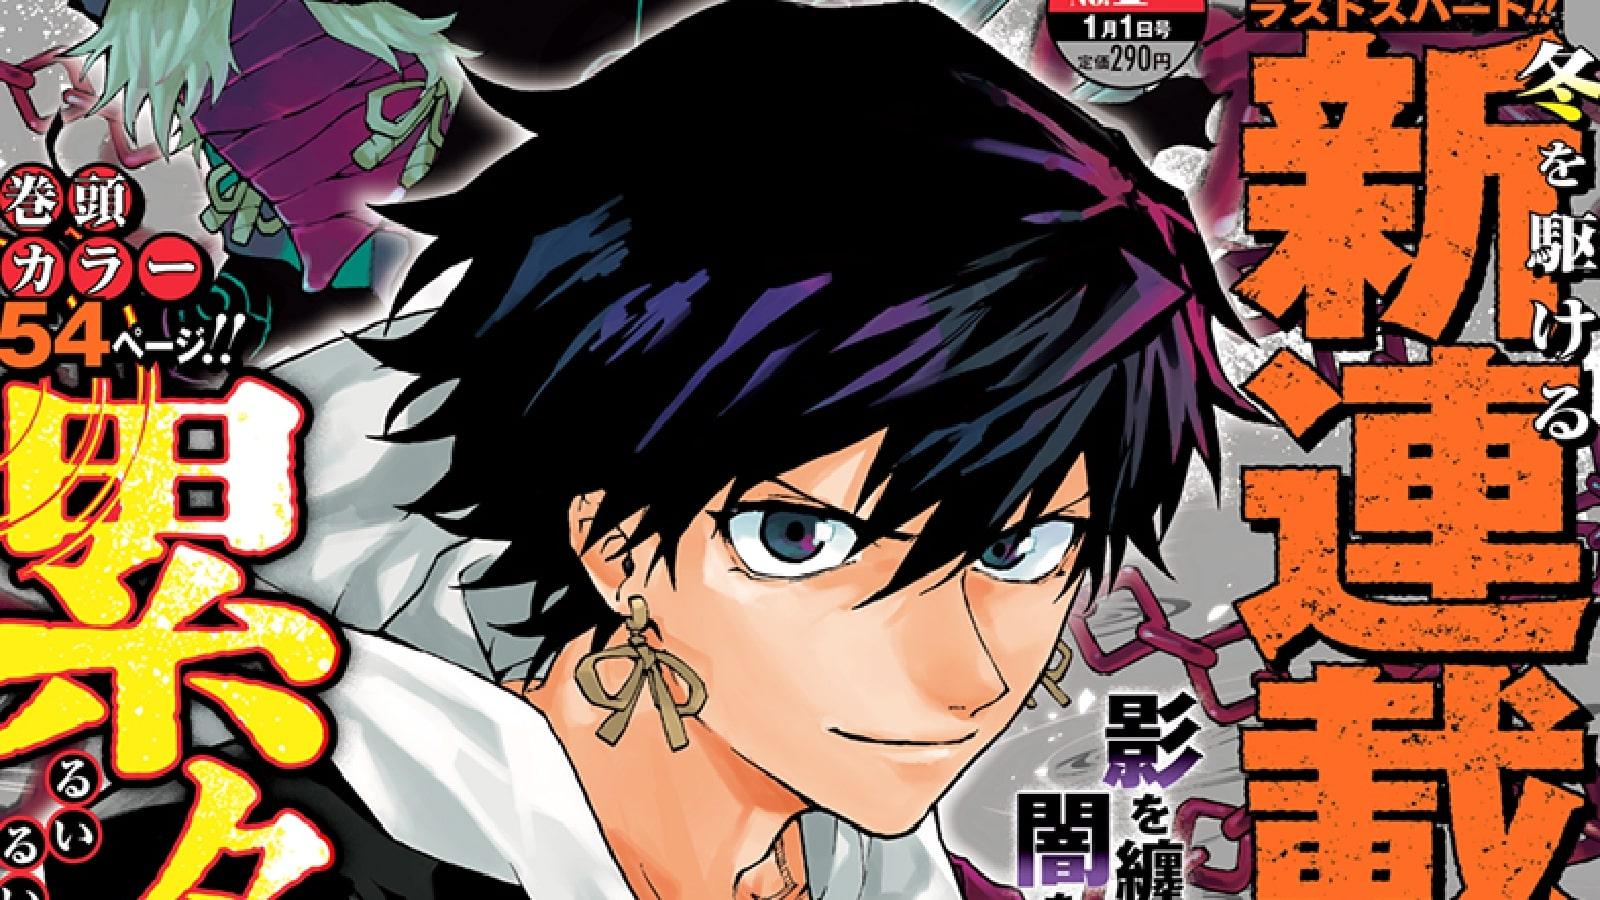 Shonen Jump Manga cover